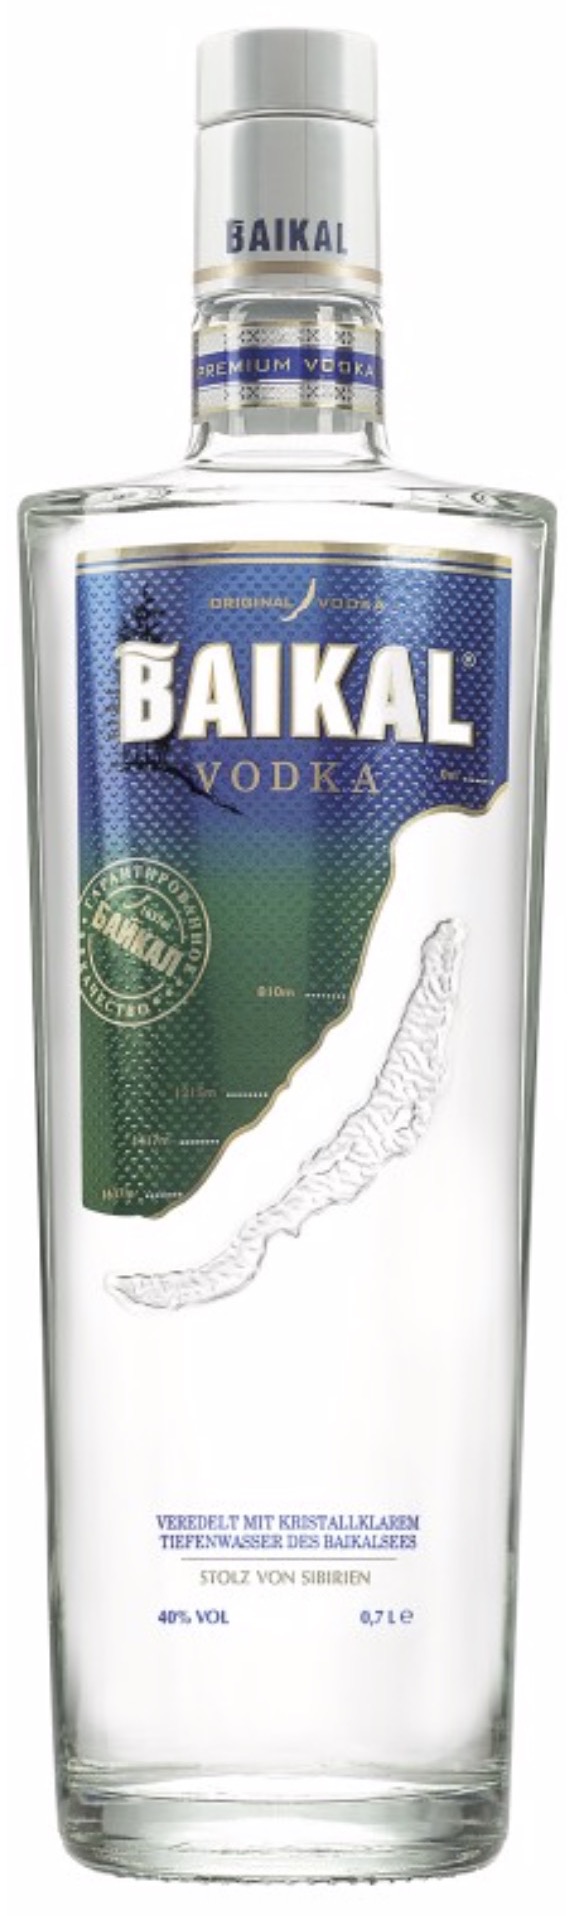 Baikal Vodka 40% Vol. 0,7 L